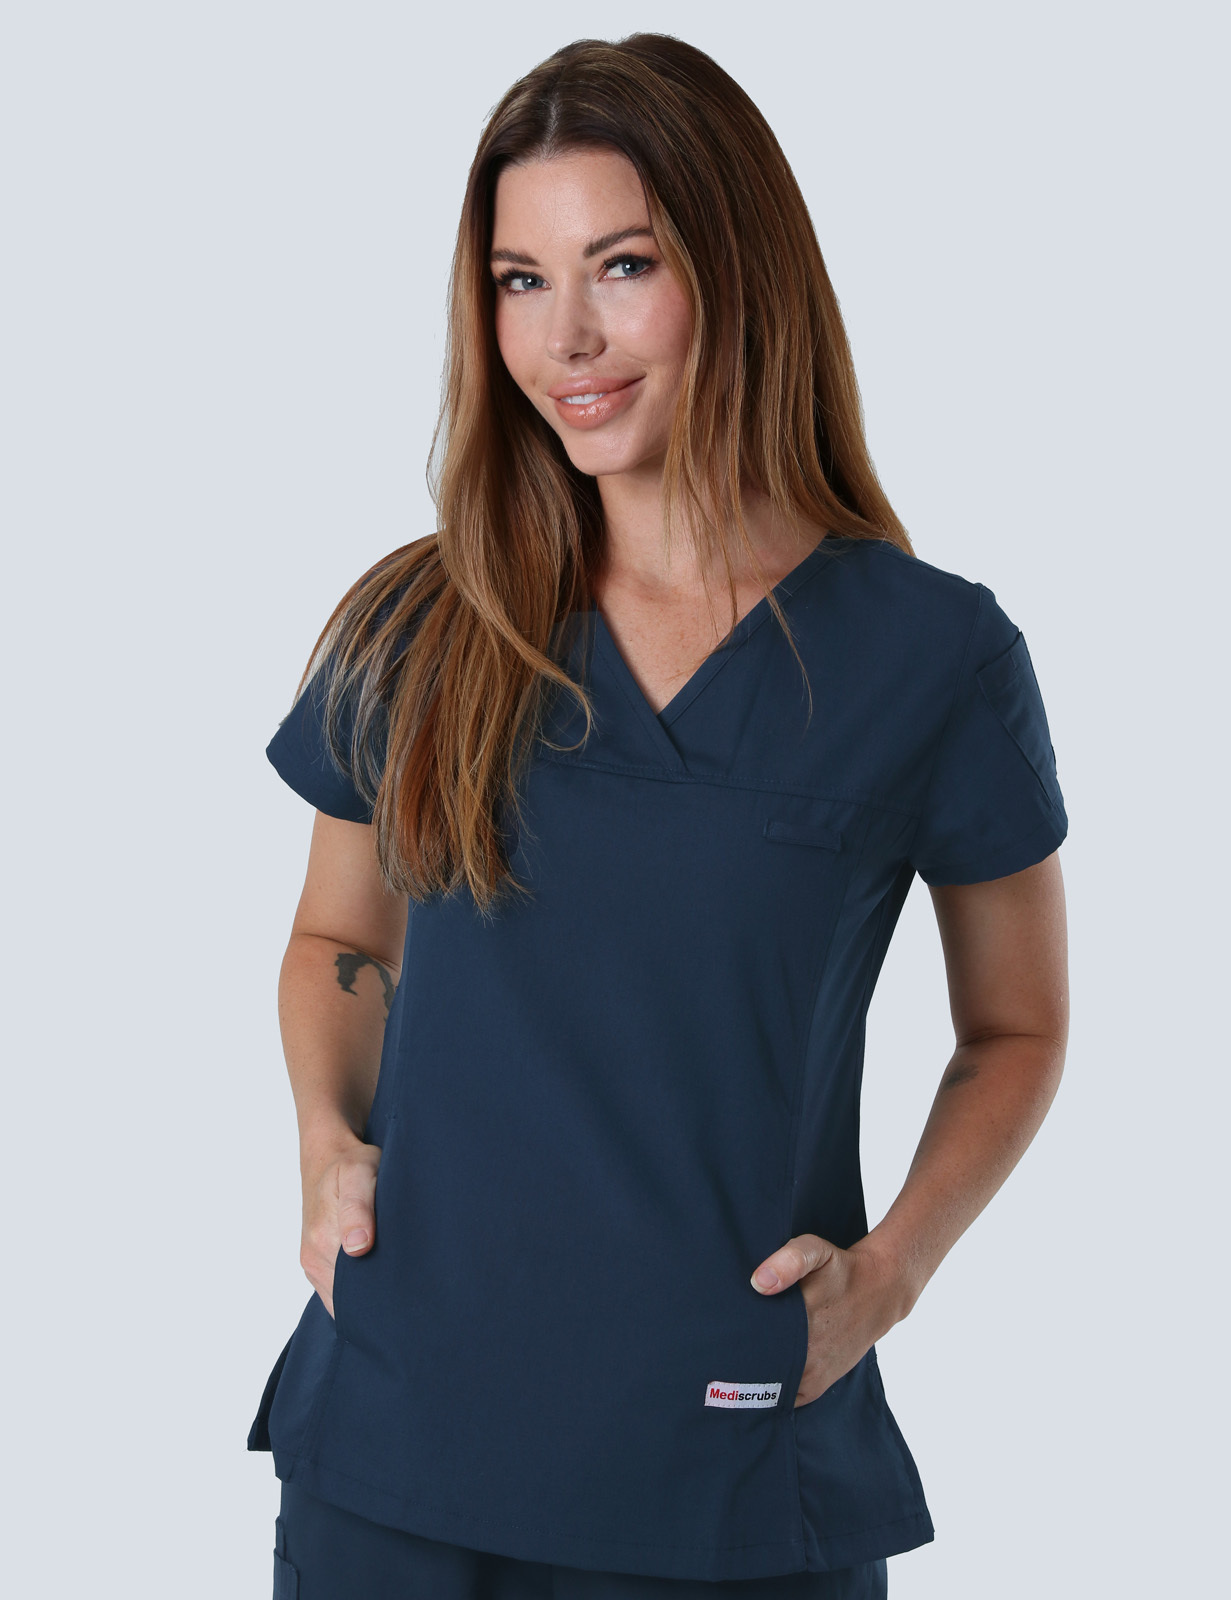 Peninsula Health Frankston - AAAU Nurse (Women's Fit Solid Scrub Top in Navy incl Logos)